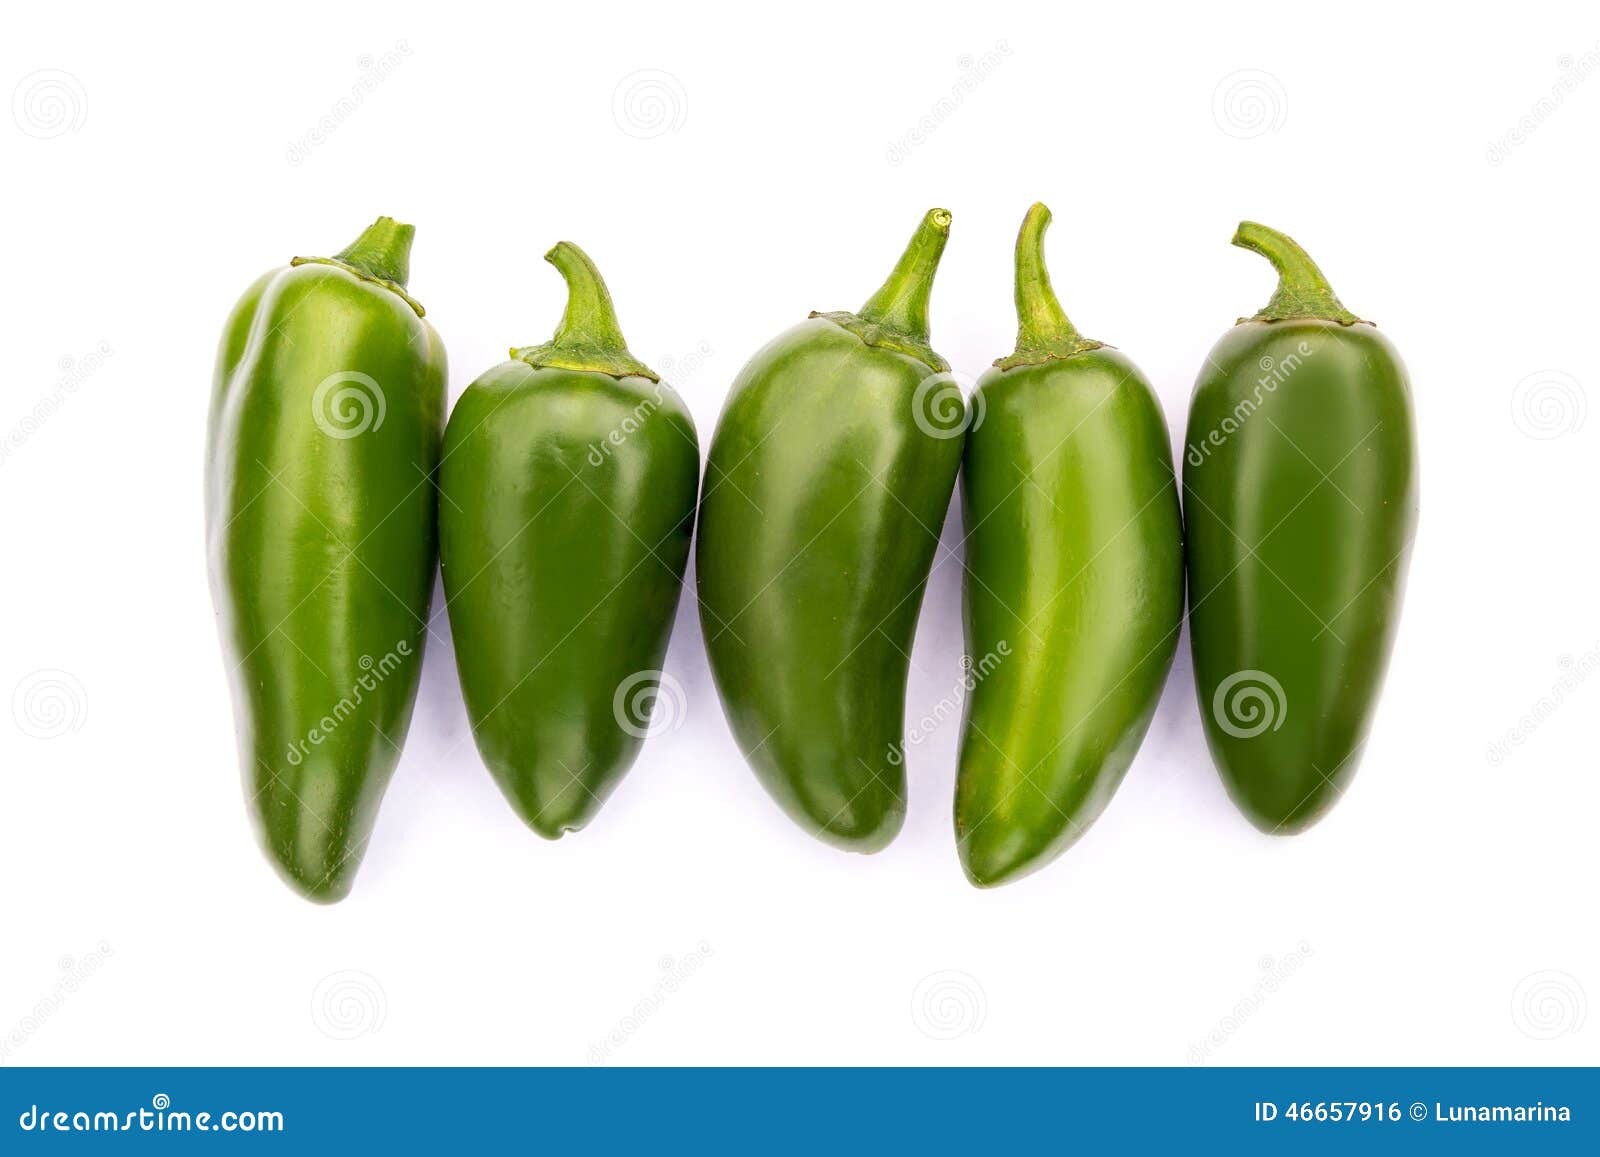 chile jalapeno hot chili pepper